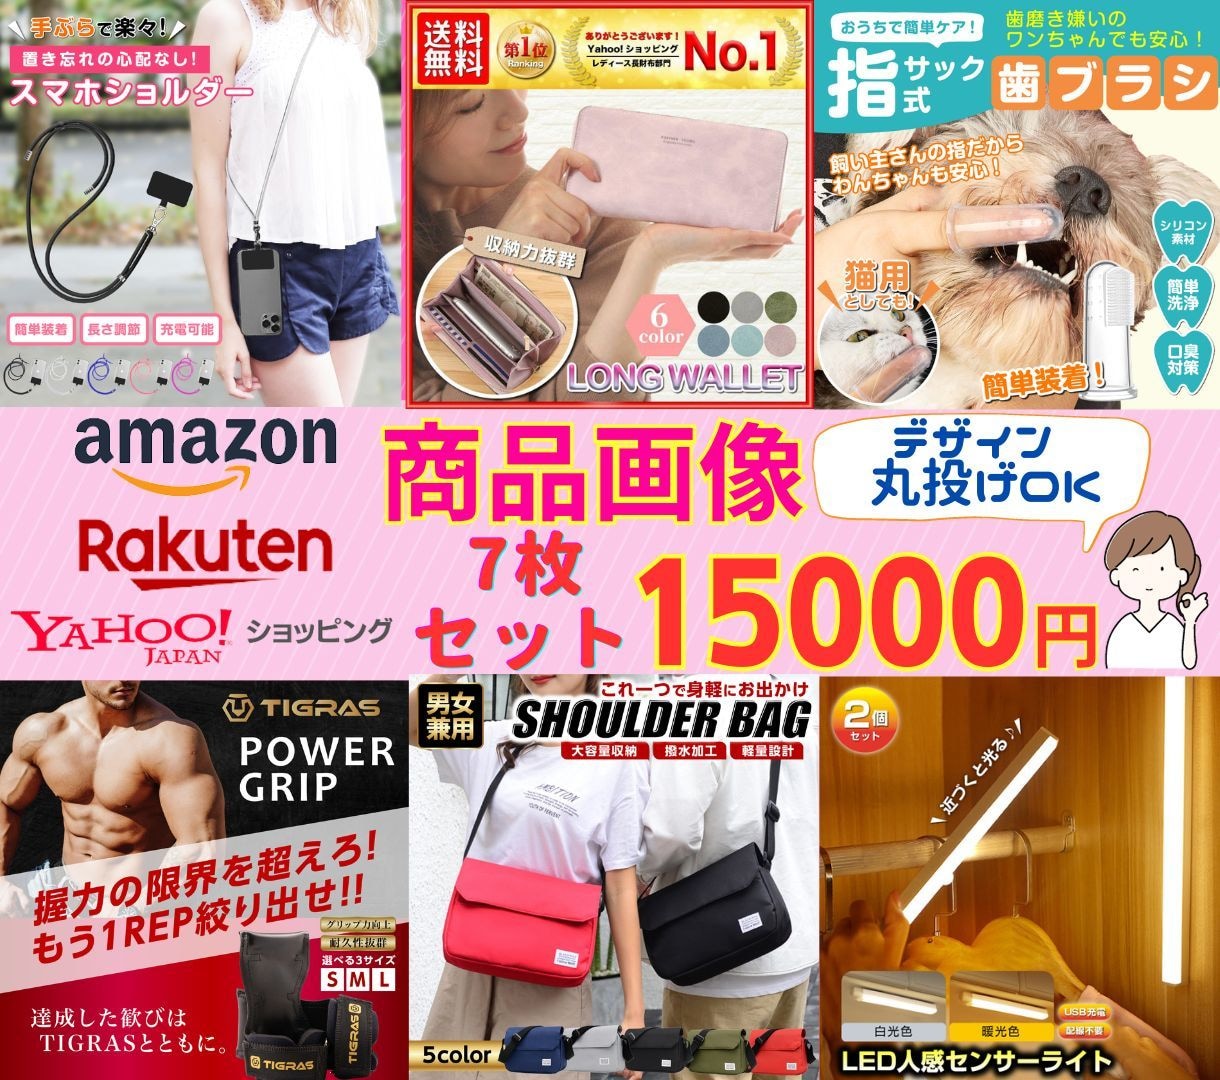 💬Coconara｜Create product images for Amazon, Rakuten, and Yahoo Rubicam Design 5.0…